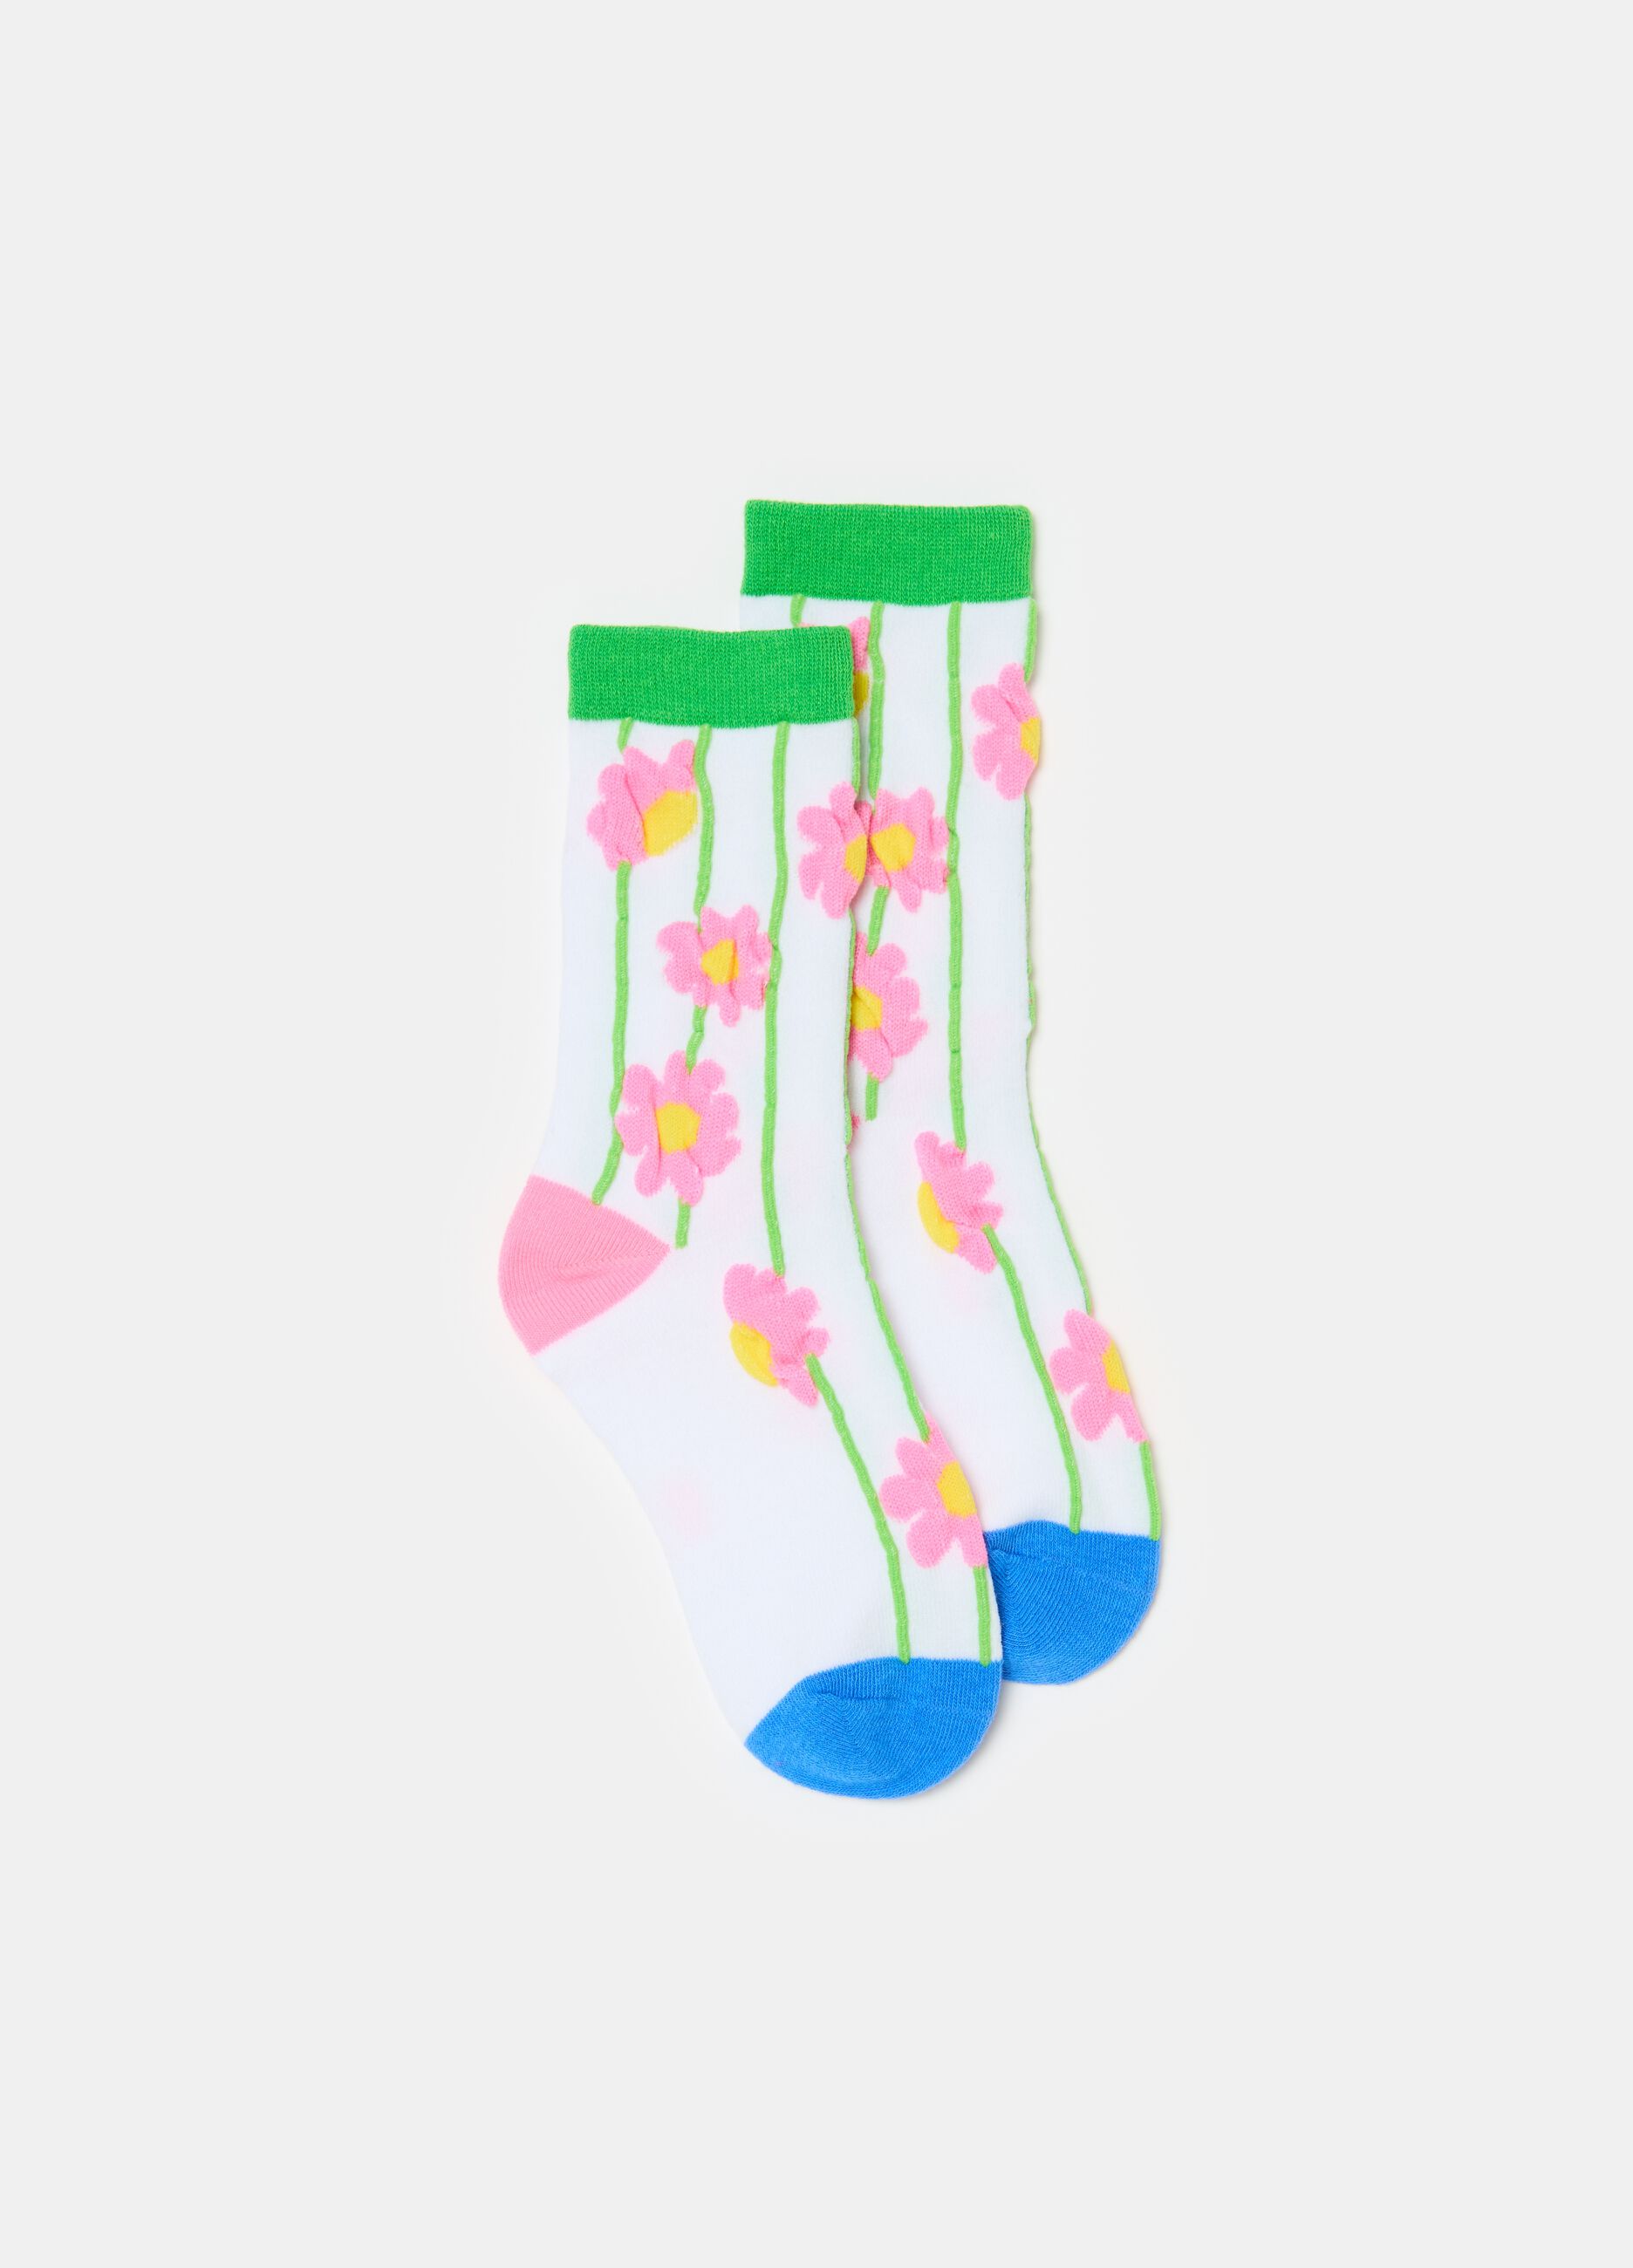 Stretch socks with flowers design